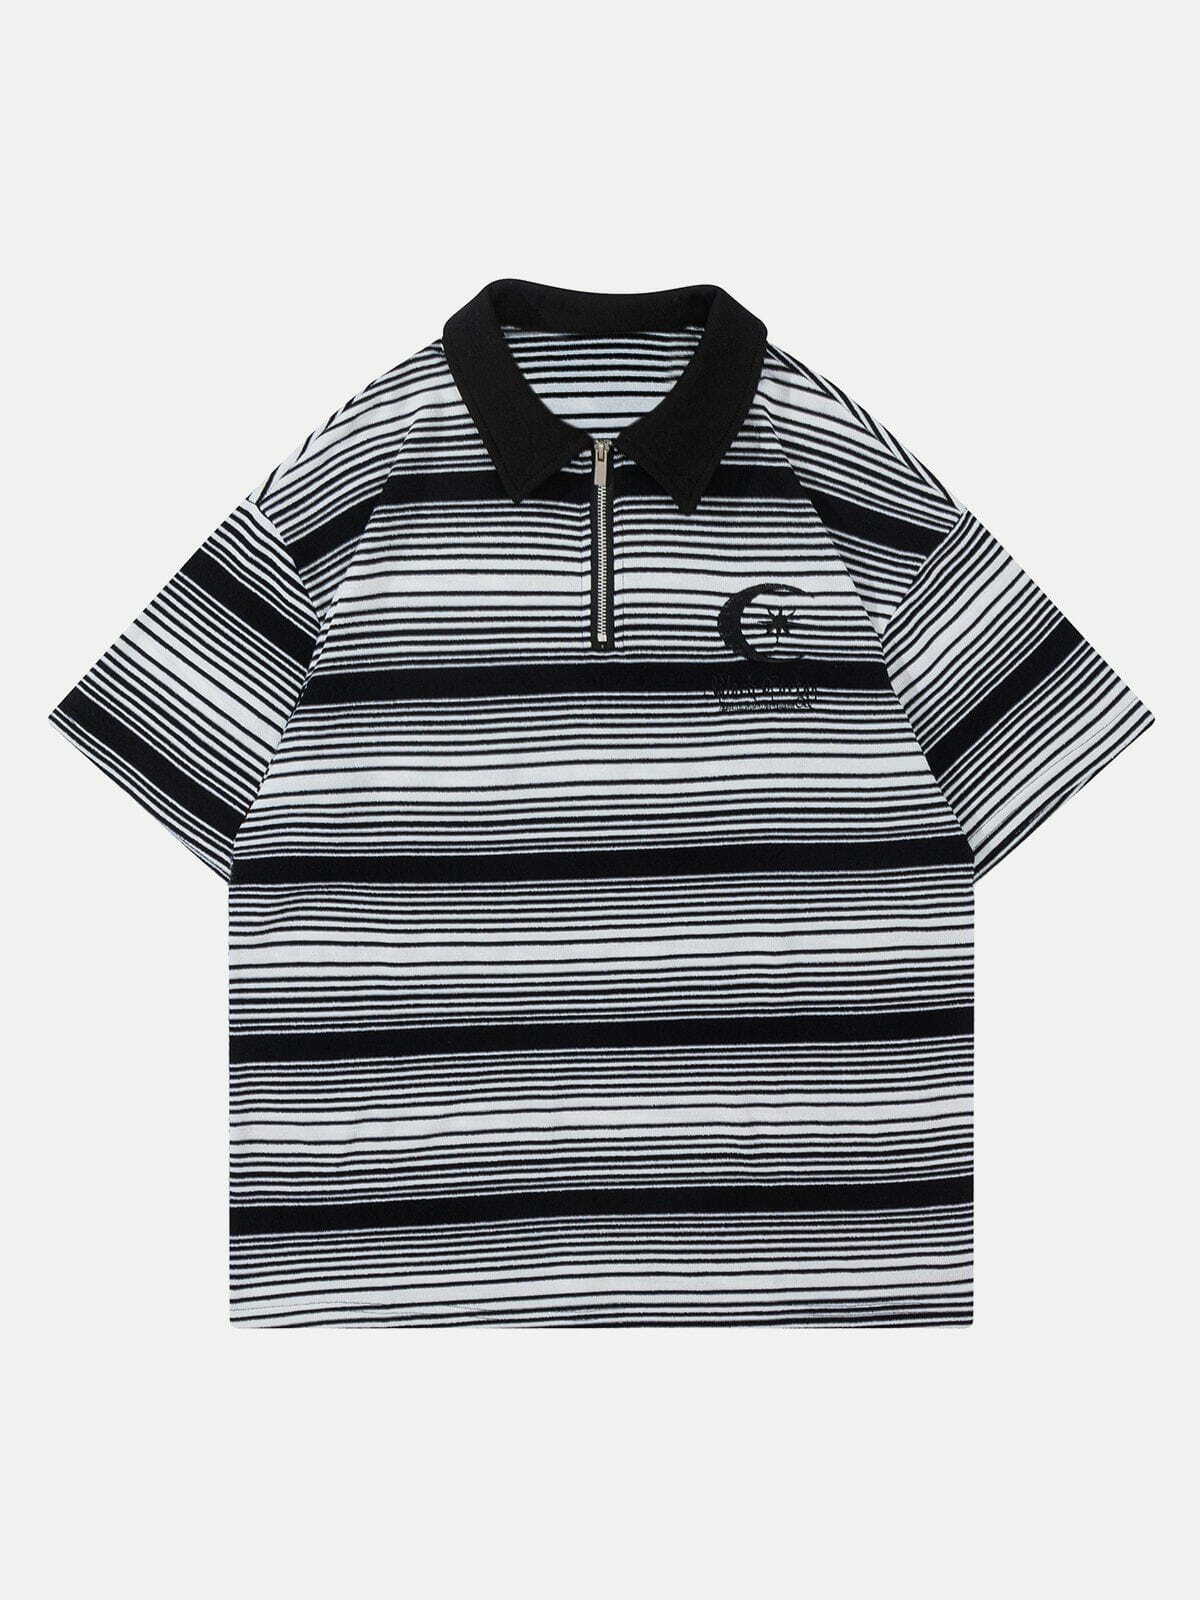 embroidered stripe polo tee retro & edgy streetwear 2892